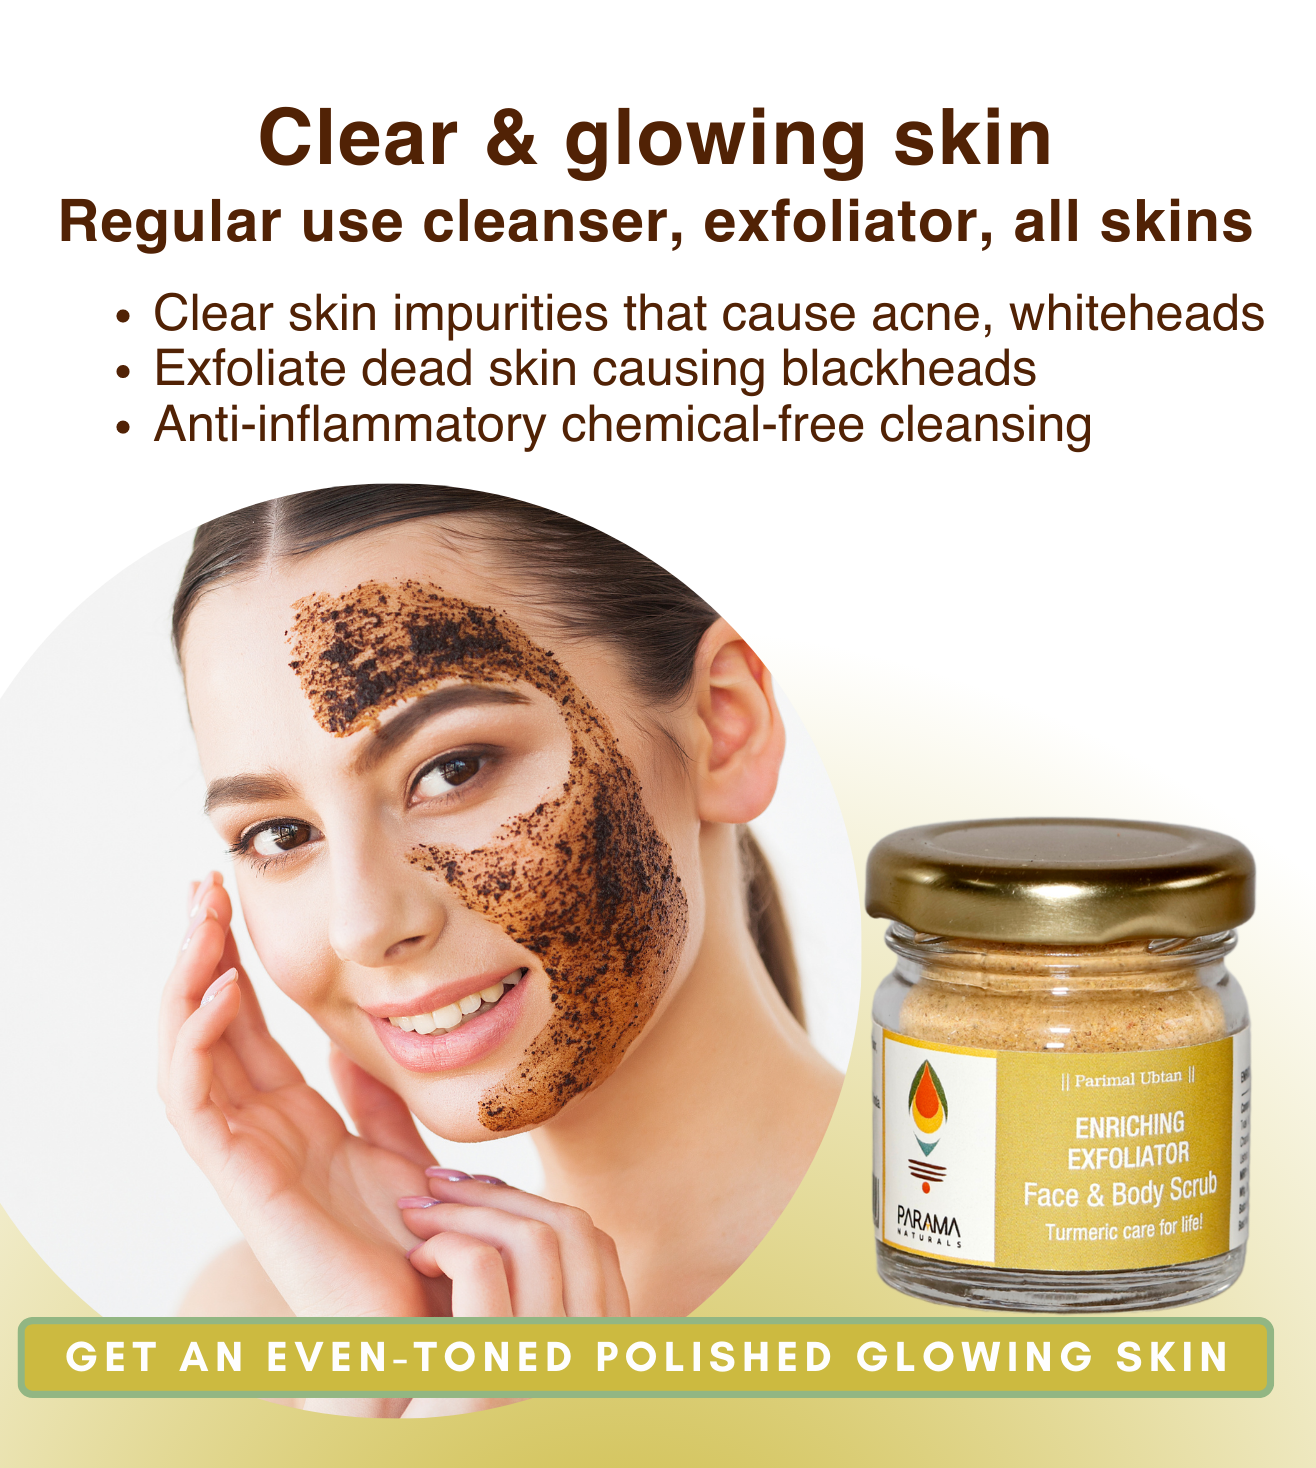 Parama Naturals Enriching Exfoliator Face & Body Scrub, Clear  & glowing skin, Regular use cleanser, exfoliator, all skins